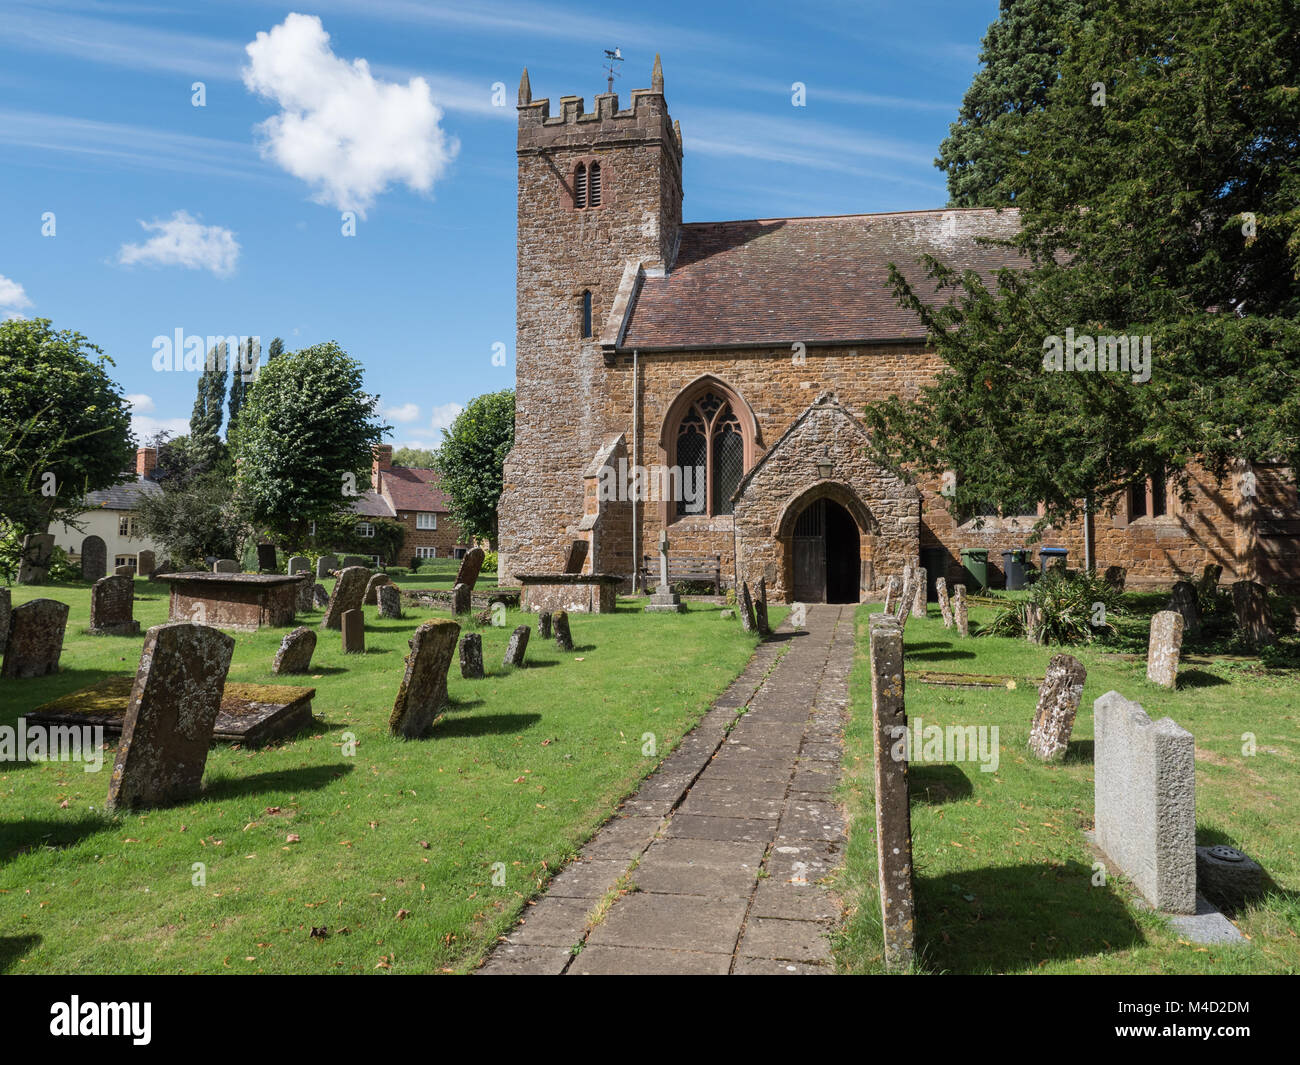 The Church of St Mary Priors Hardwick Warwickshire England UK Stock Photo